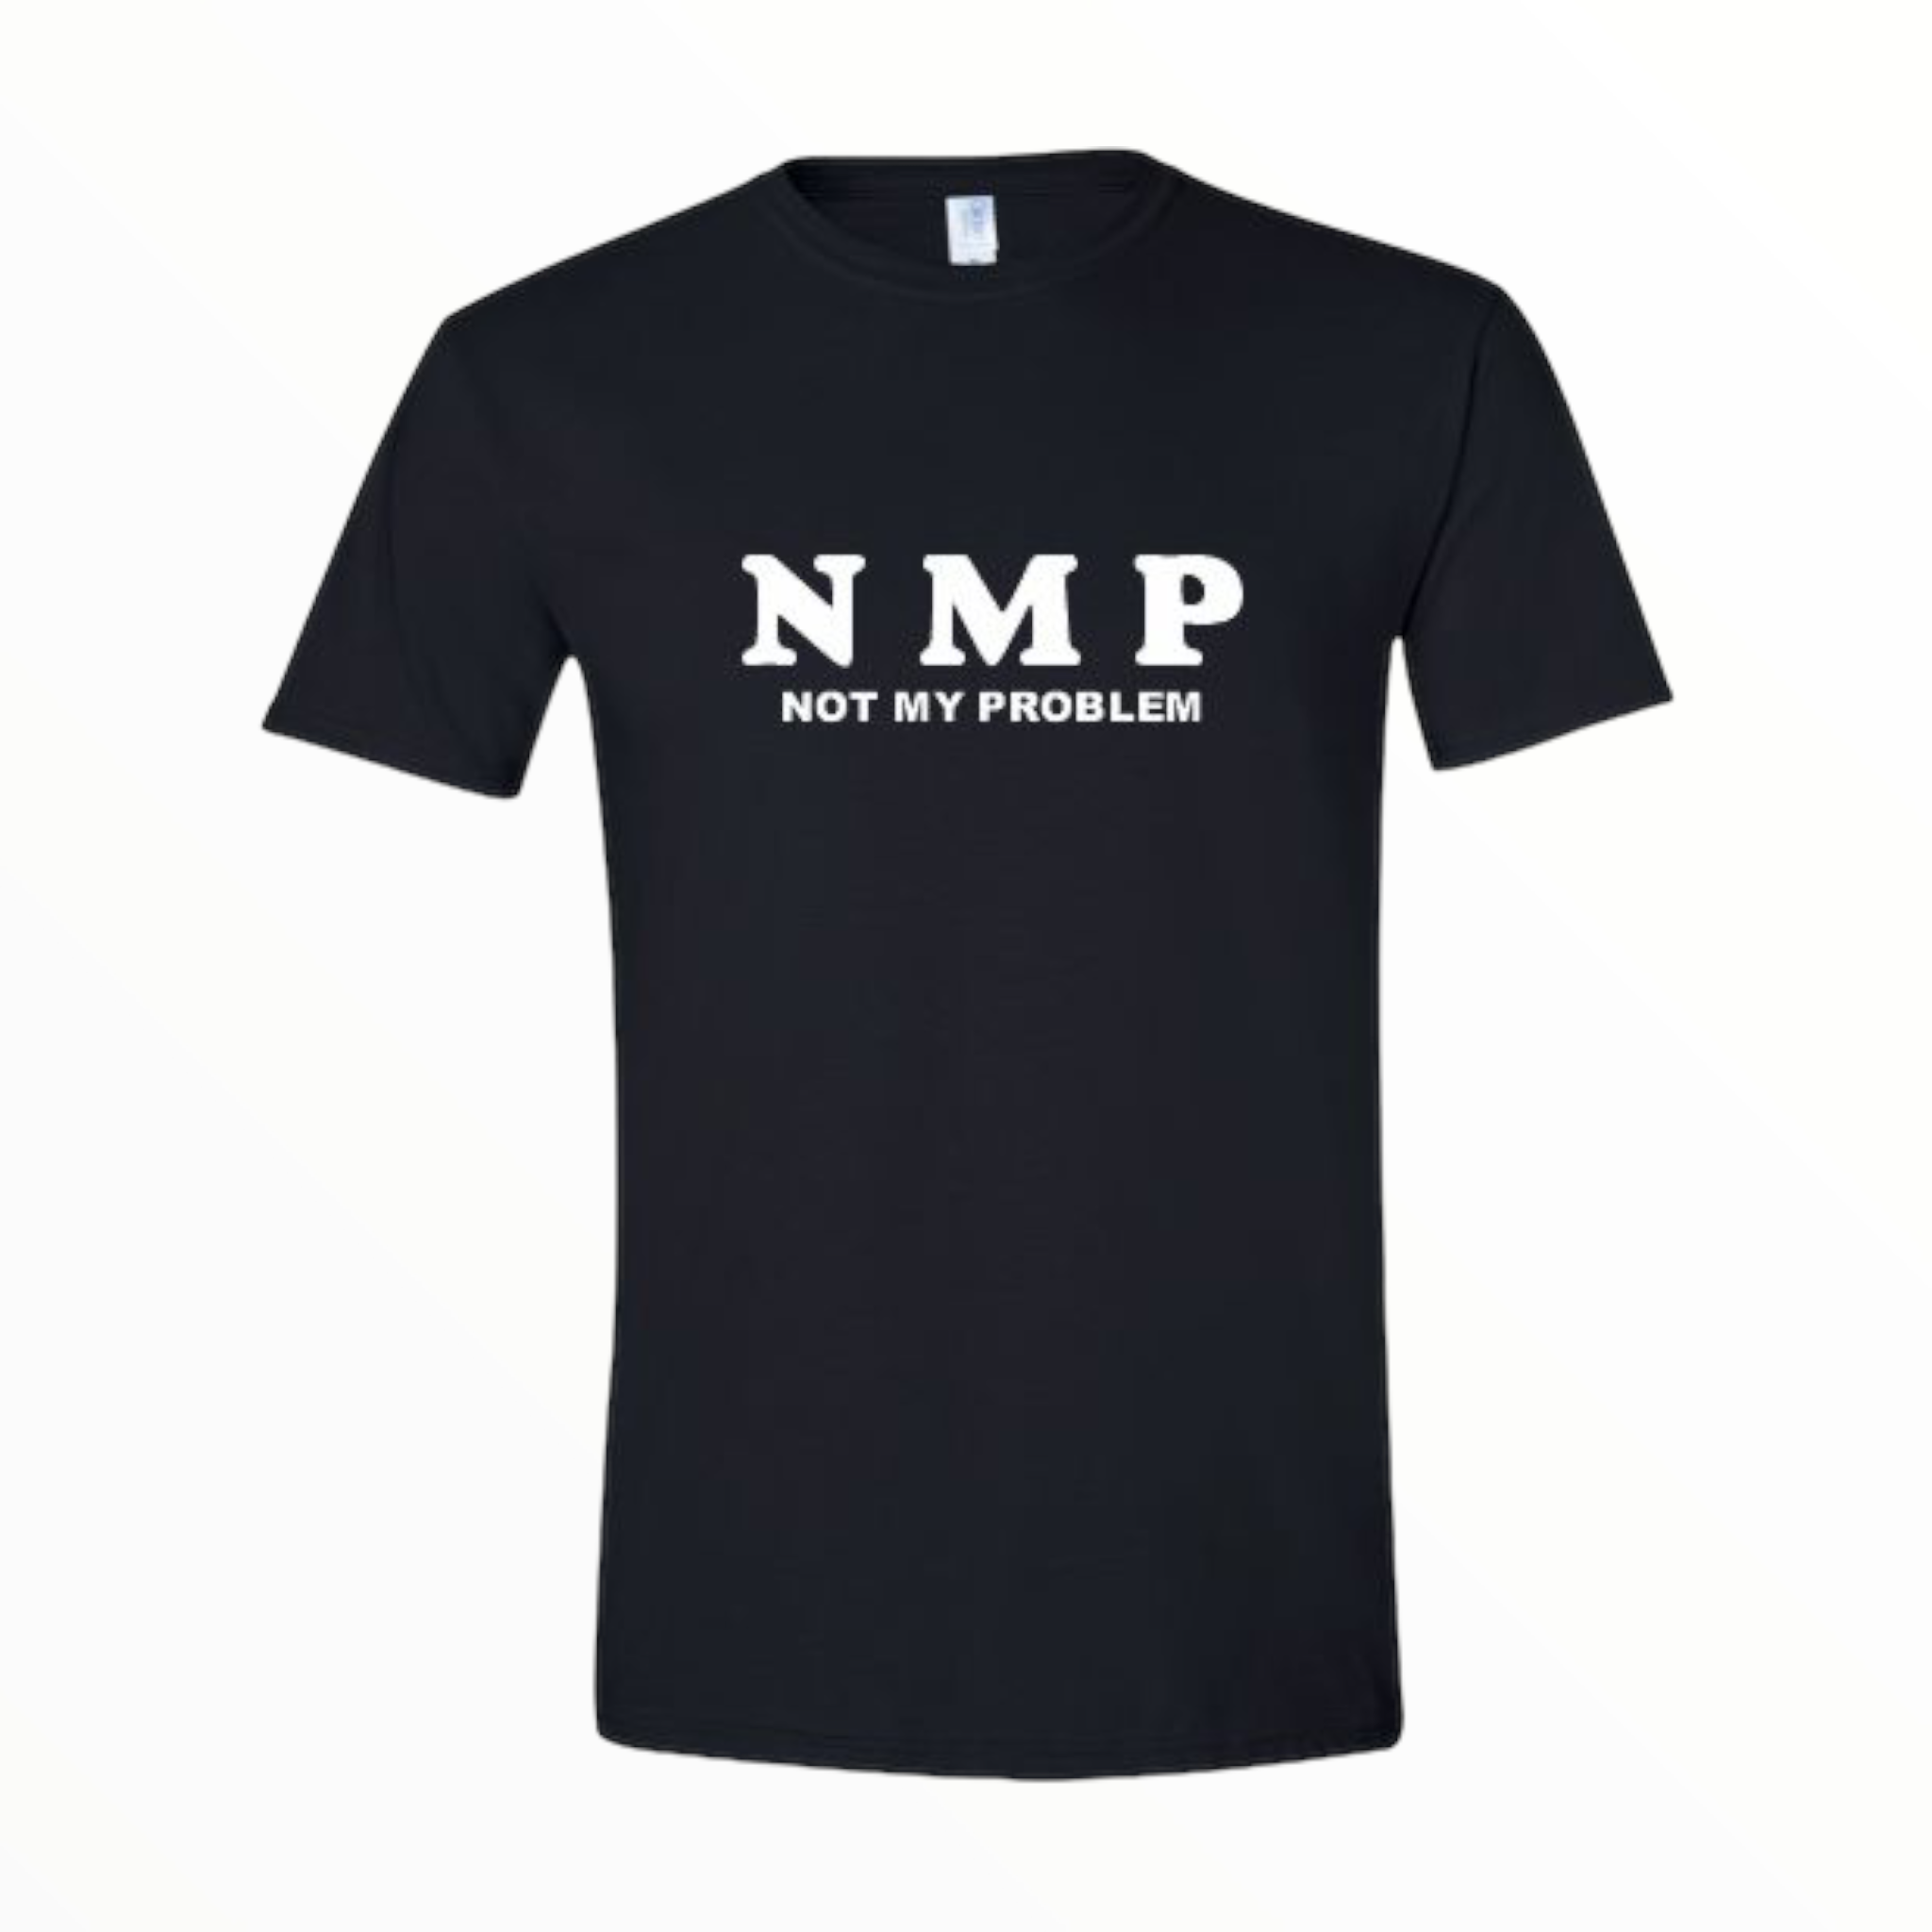 NMP not my problem t-shirt